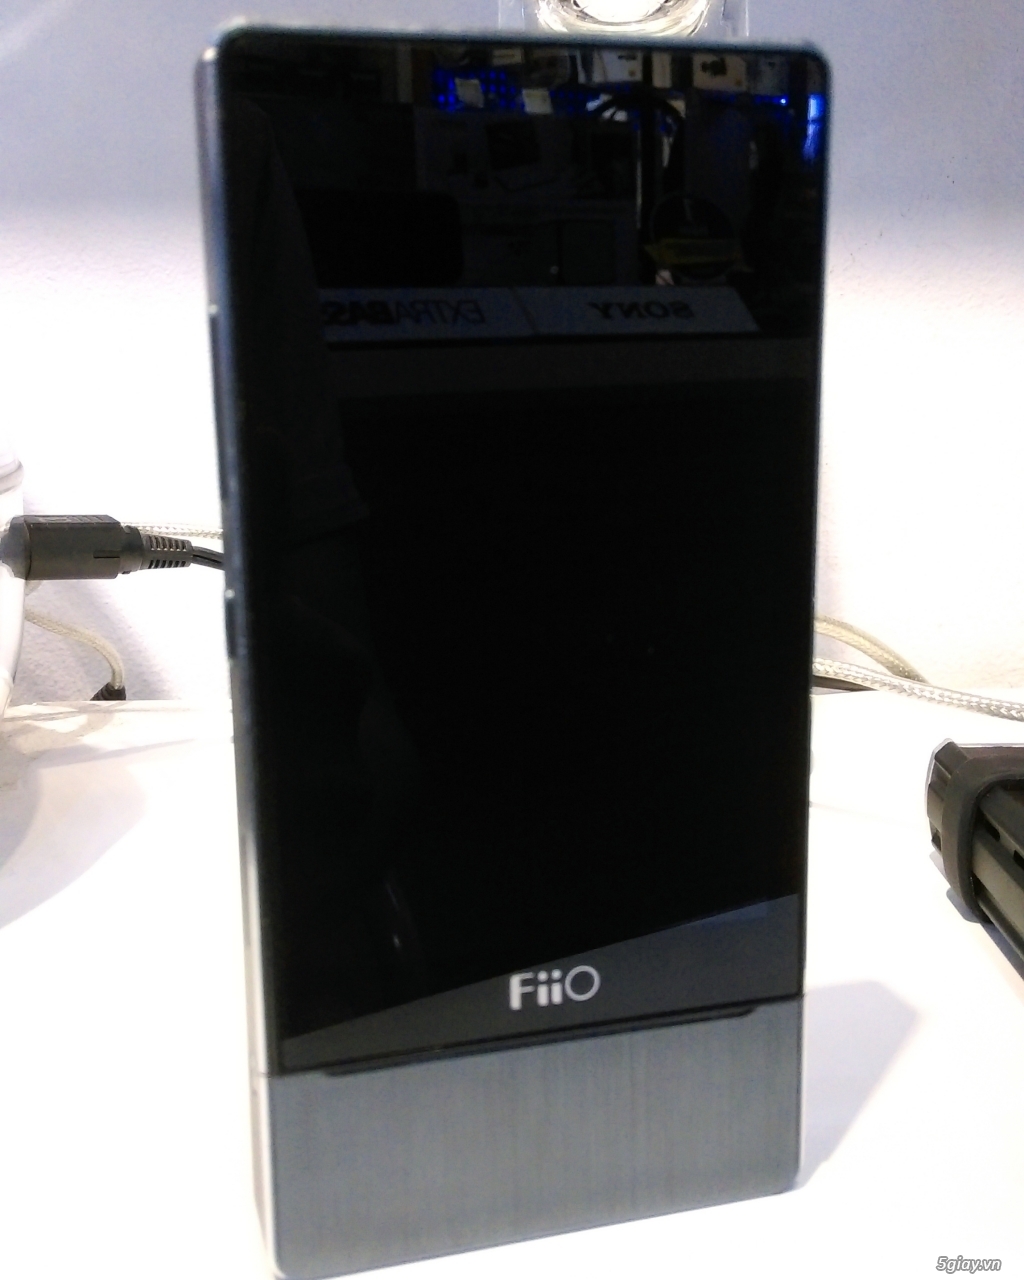 Cần bán Fiio X7 (giá tốt + bao da xịn) - 2